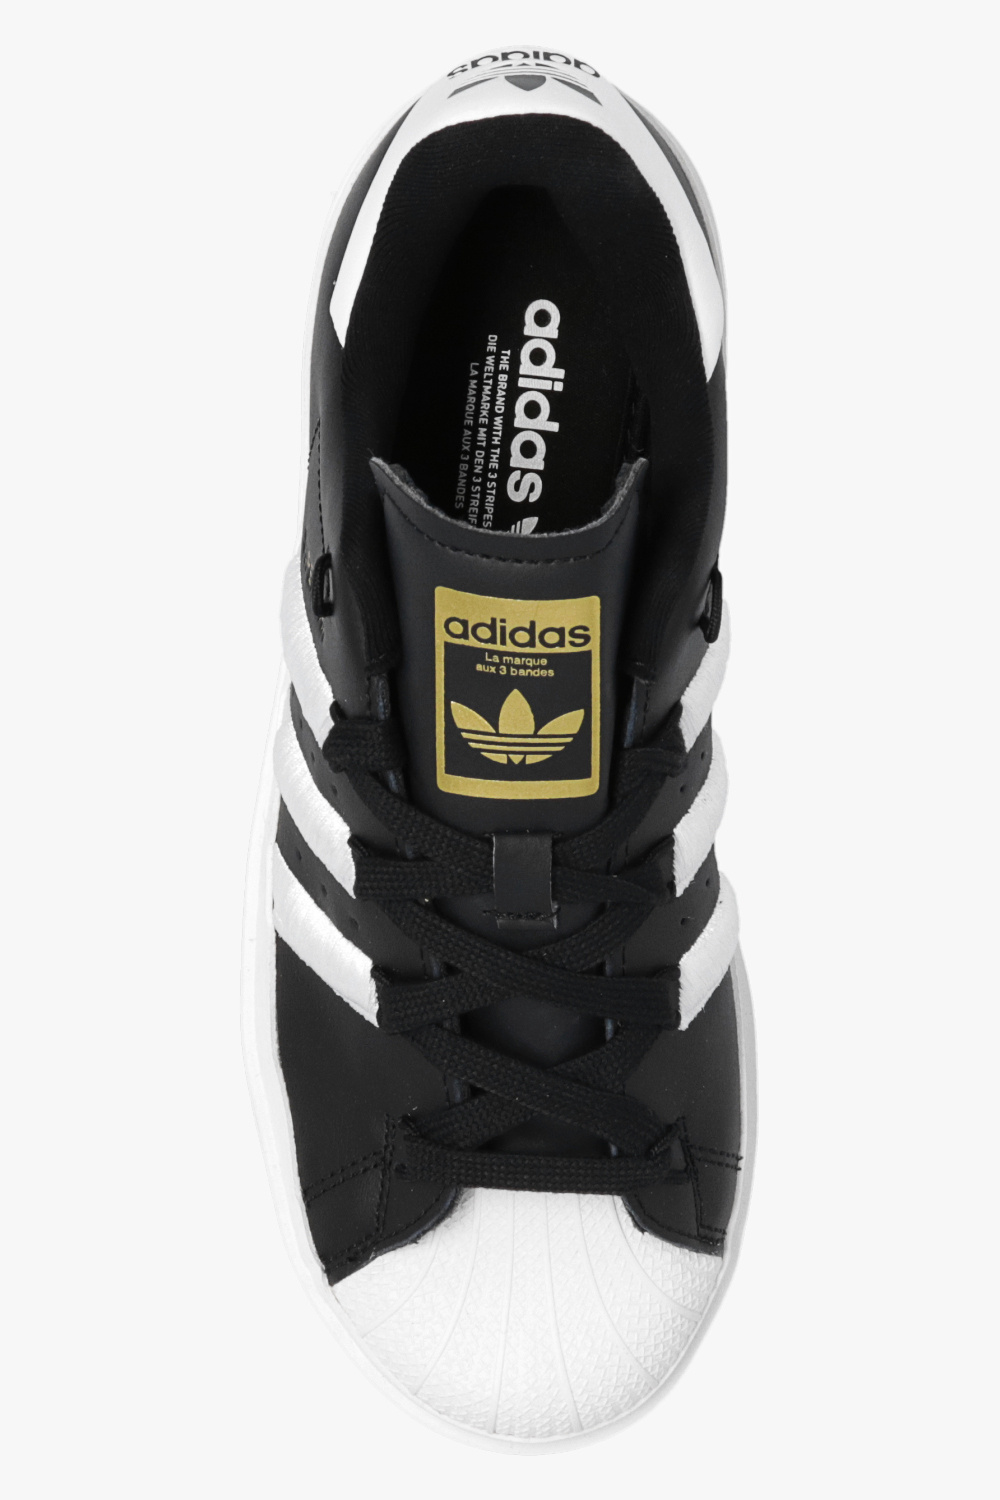 Adidas Superstar 2 Shoes  Louis vuitton shoes sneakers, Adidas shoes  superstar, Adidas